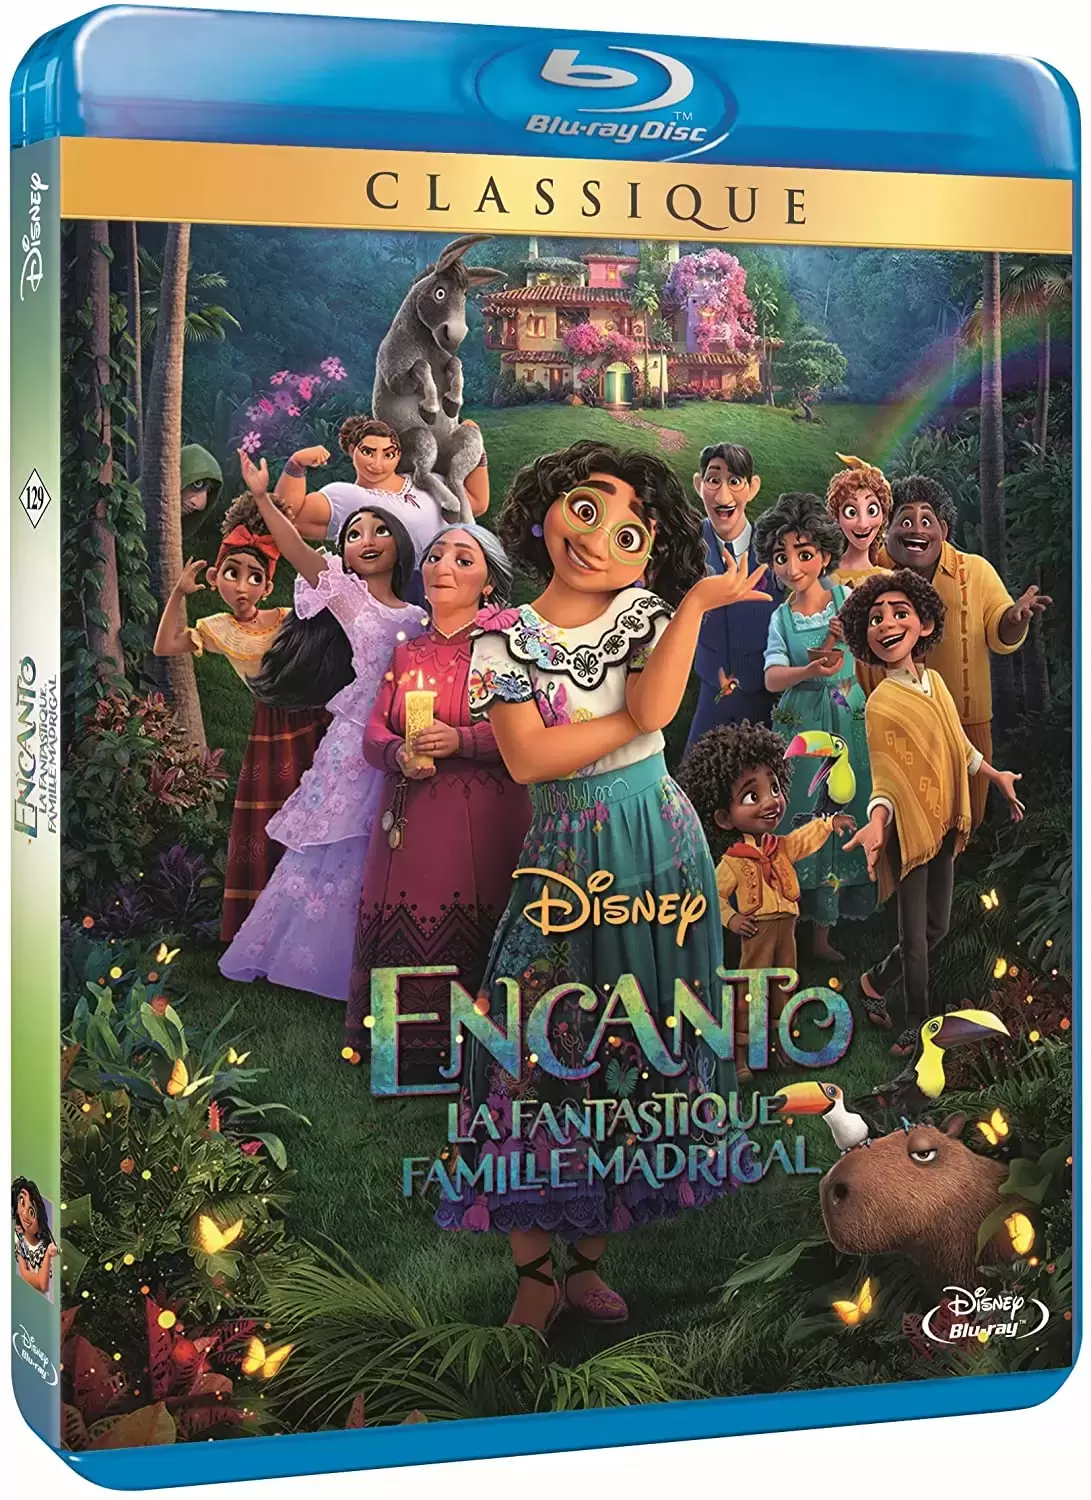 Les grands classiques de Disney en Blu-Ray - Encanto, la Fantastique Famille Madrigal